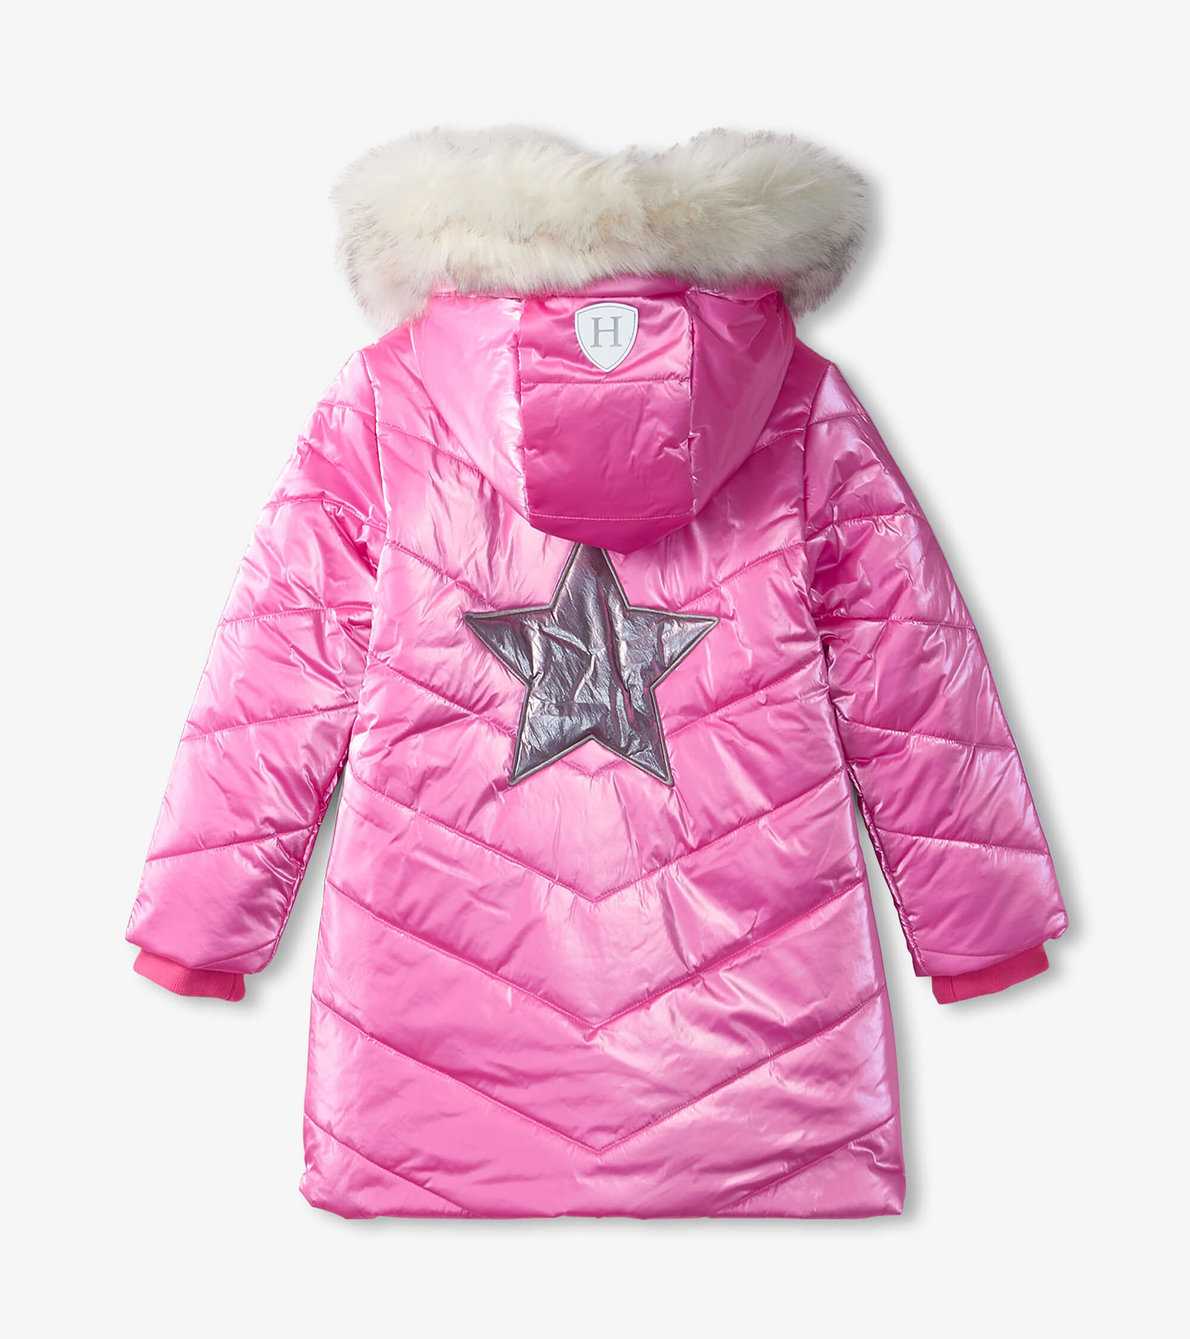 View larger image of Pink Star Kids Puffer Jacket